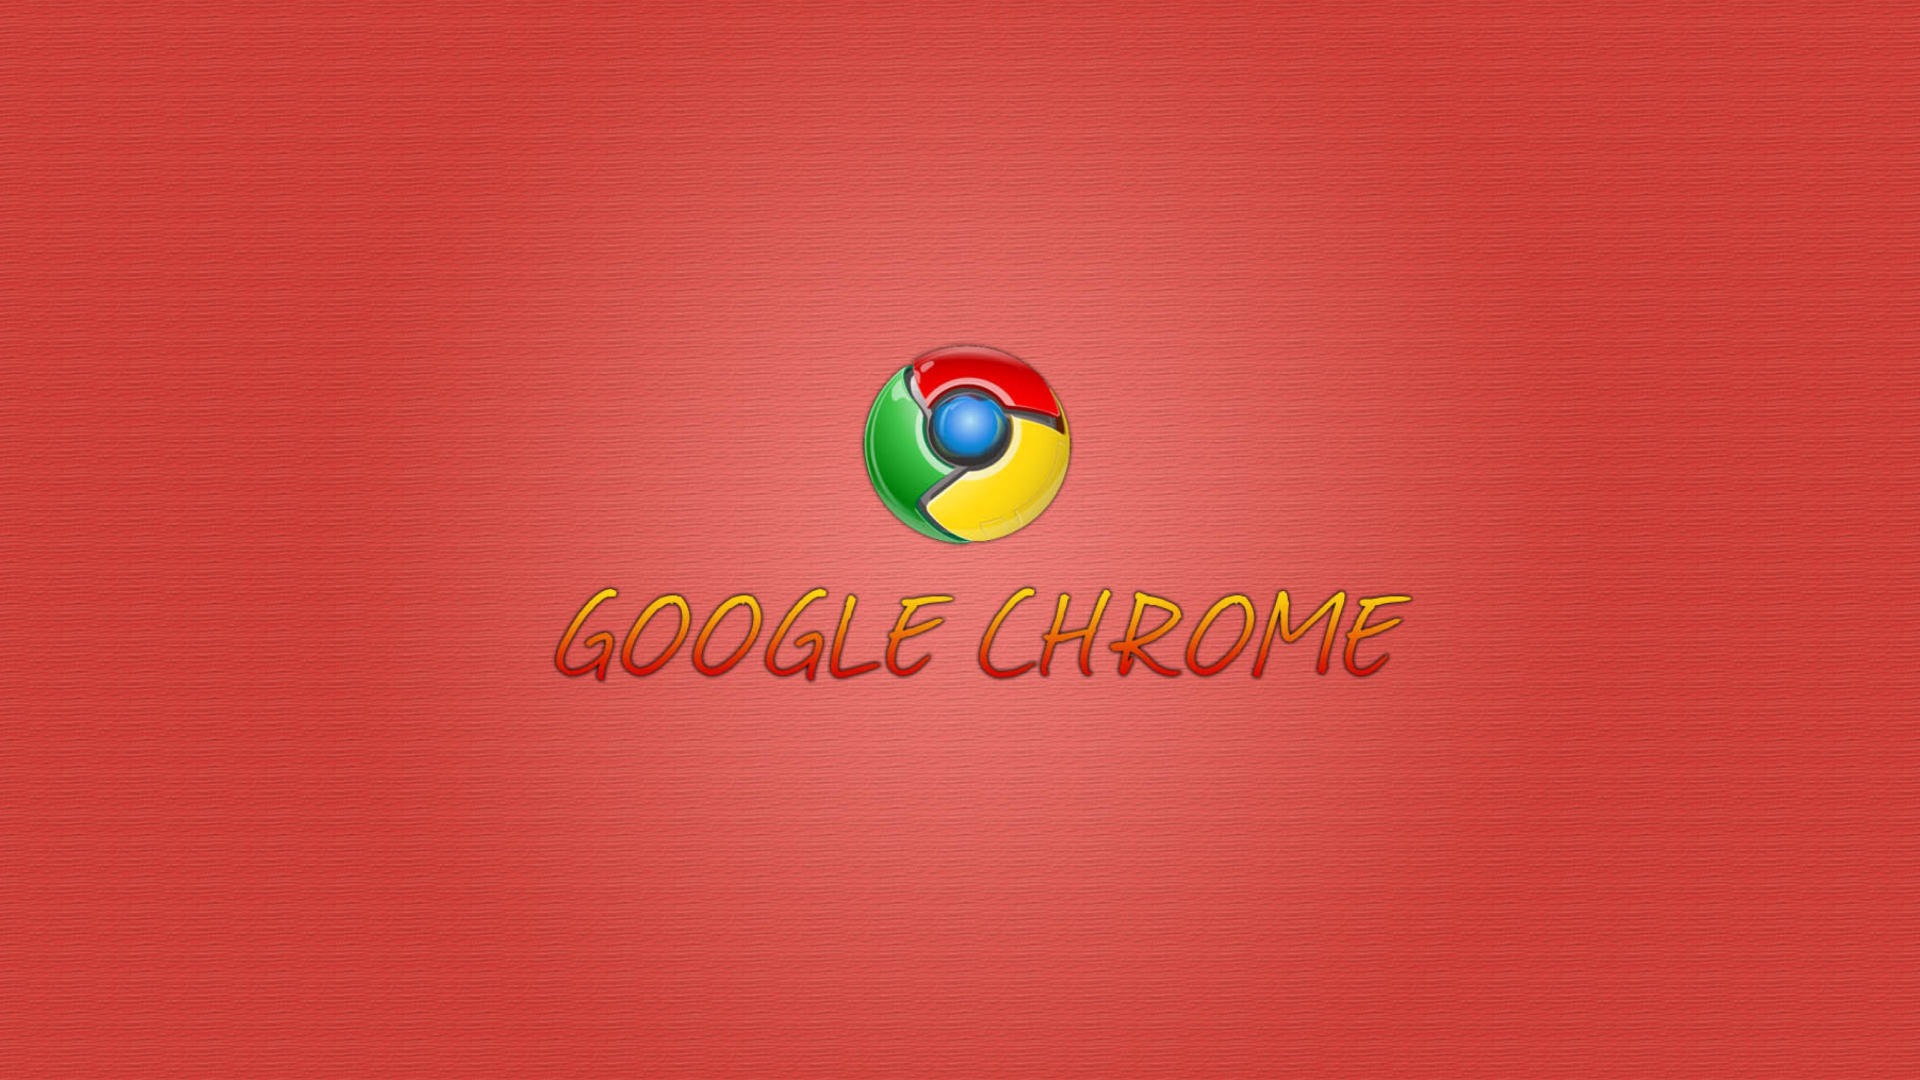 Google Chrome Browser wallpaper 1920x1080